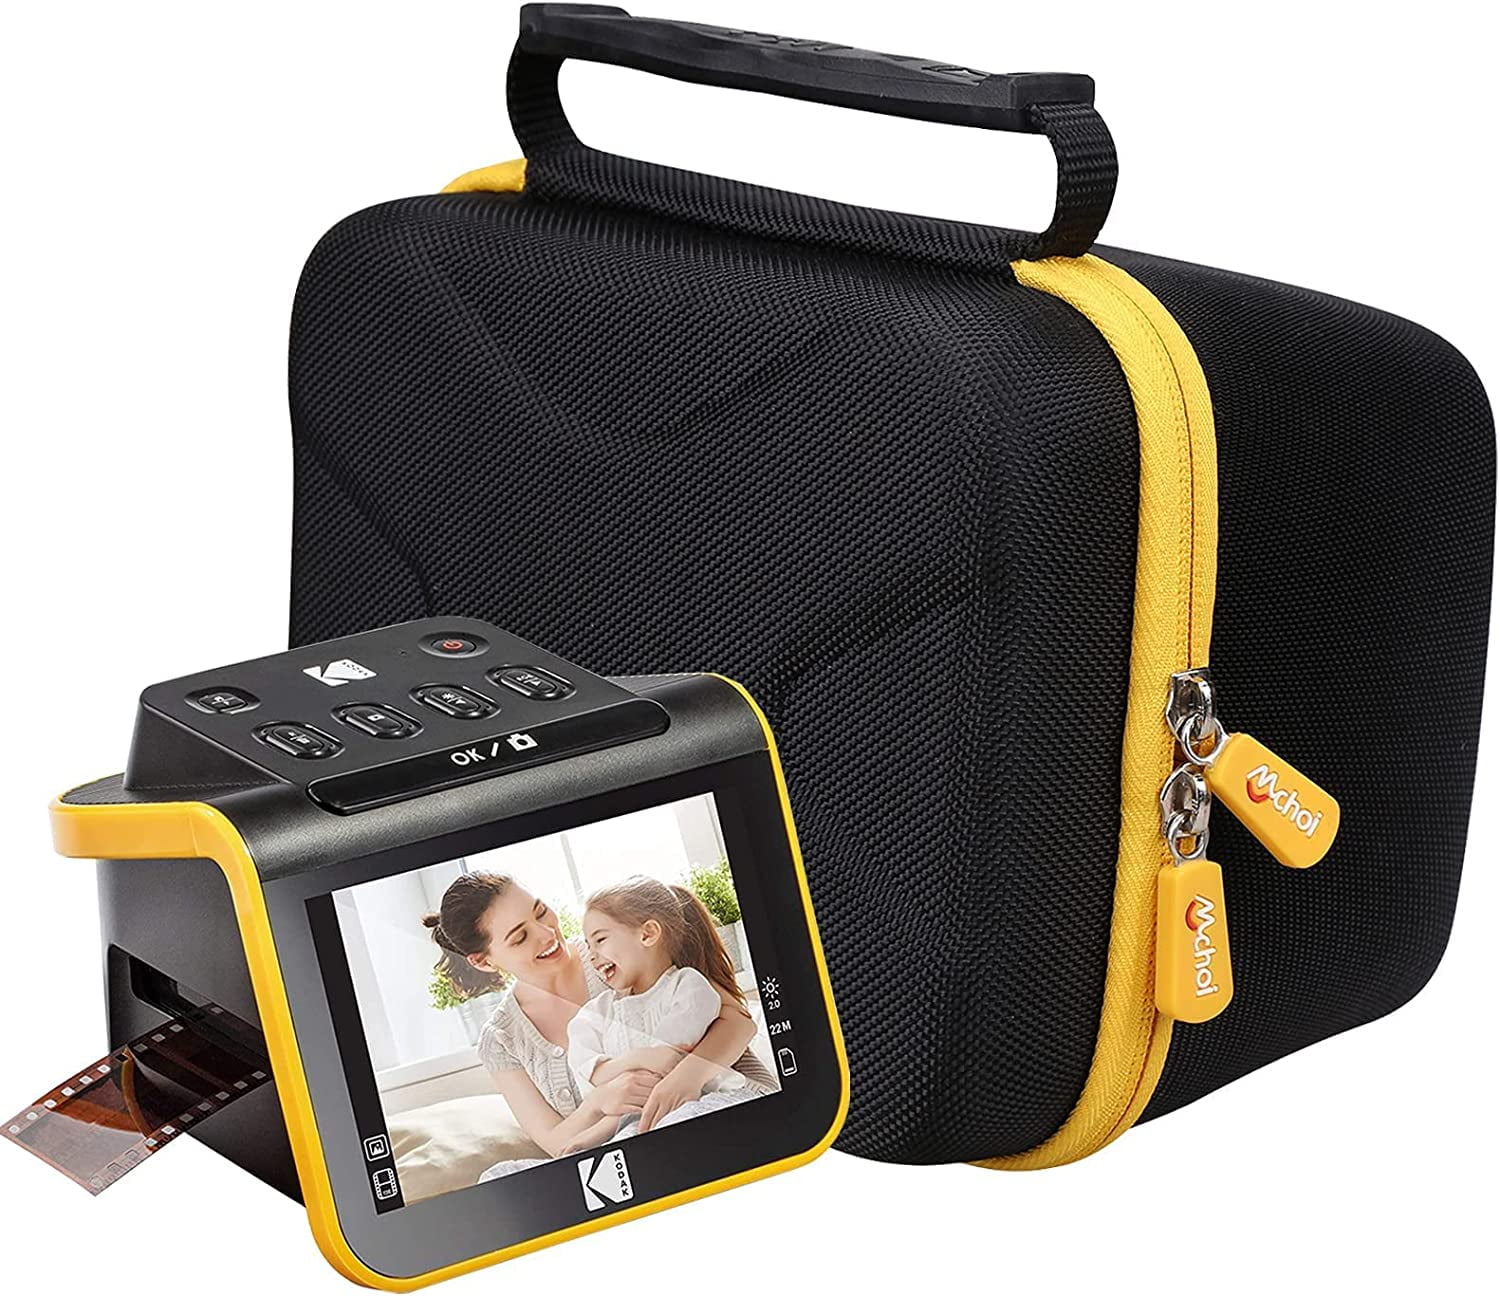 Kodak Slide N Scan Digital Film Scanner Review: Easily Preserve Slides and  Film After a Quick Scan - Serious Insights